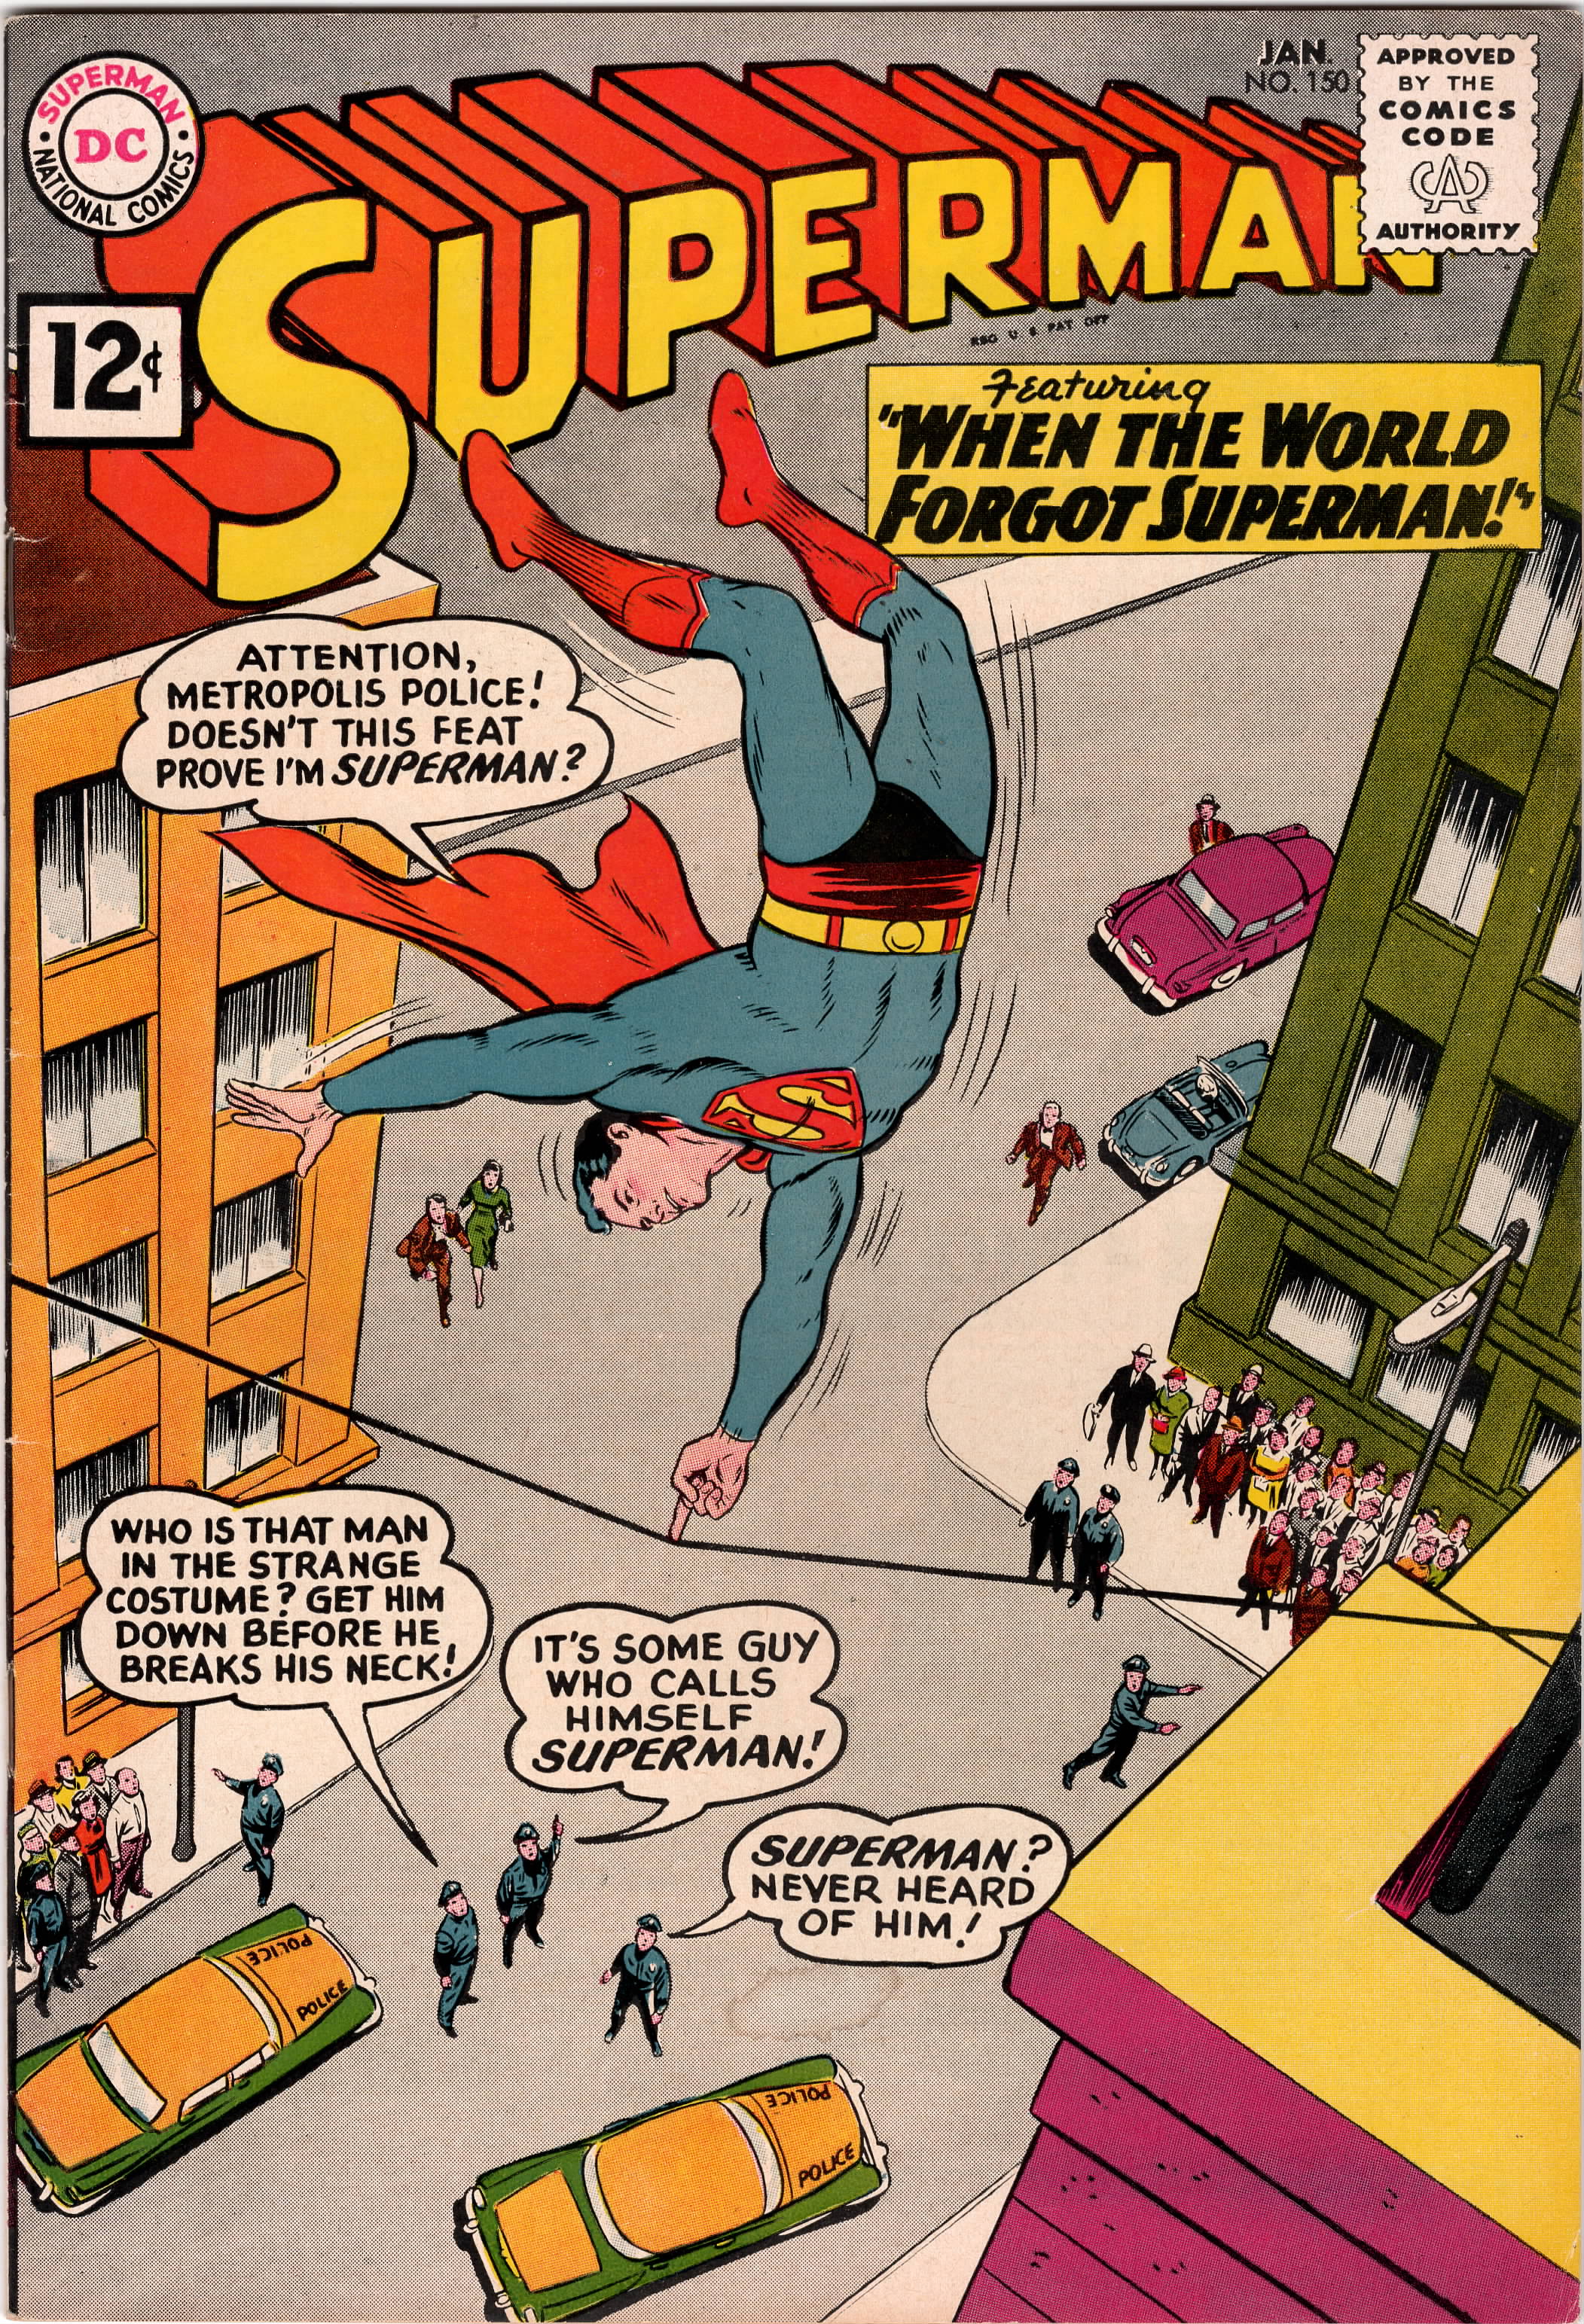 Superman #150